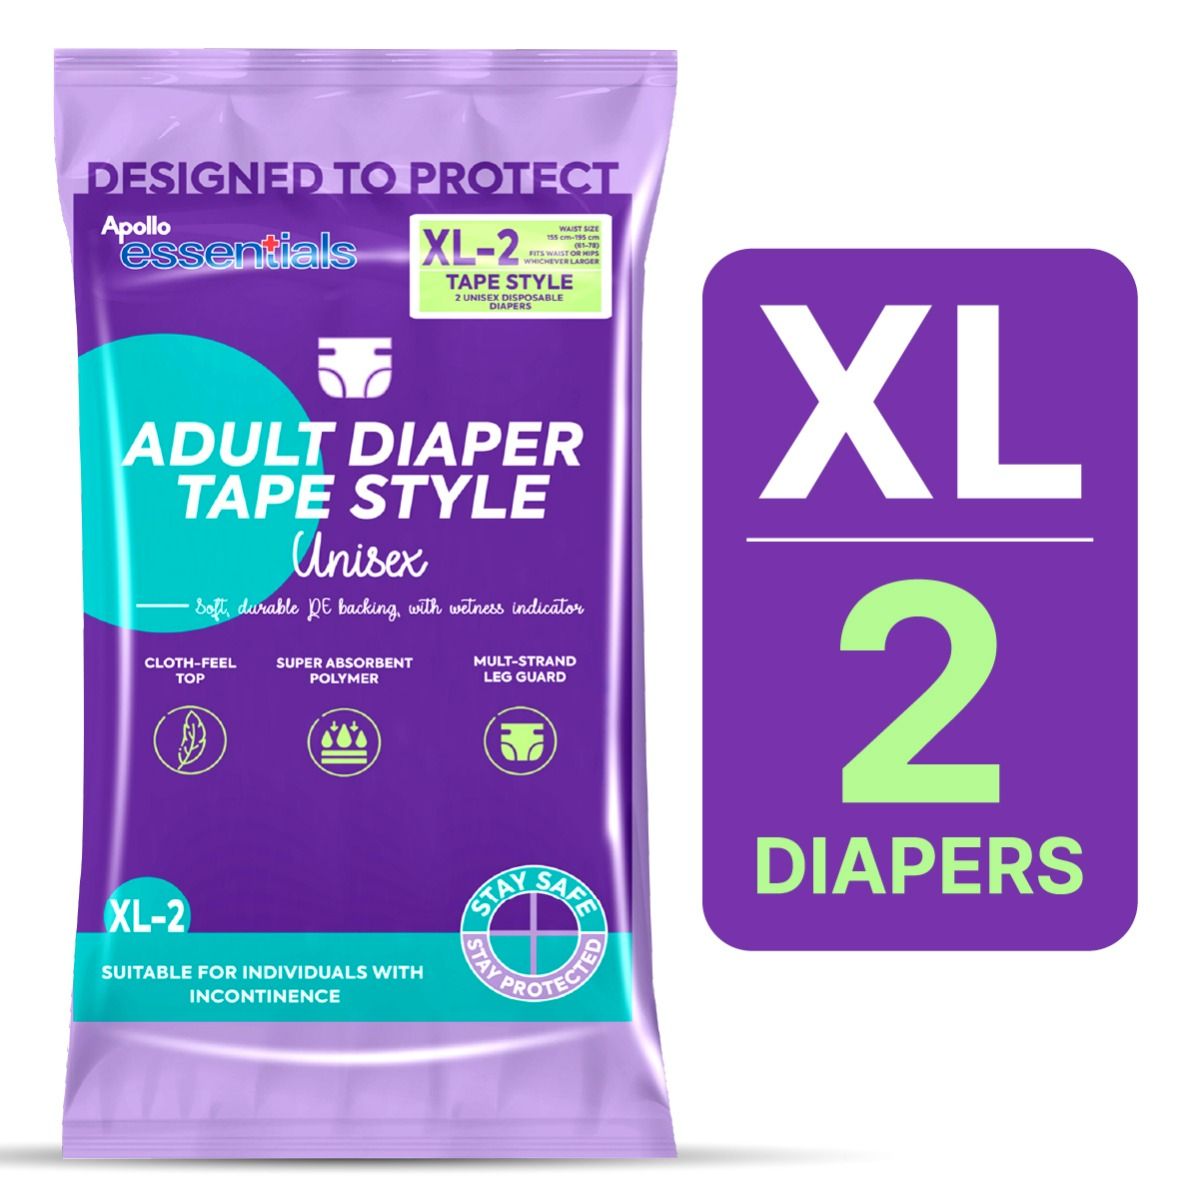 Buy Apollo Essentials Adult Diaper Tape Style Unisex XL, 2 Count Online